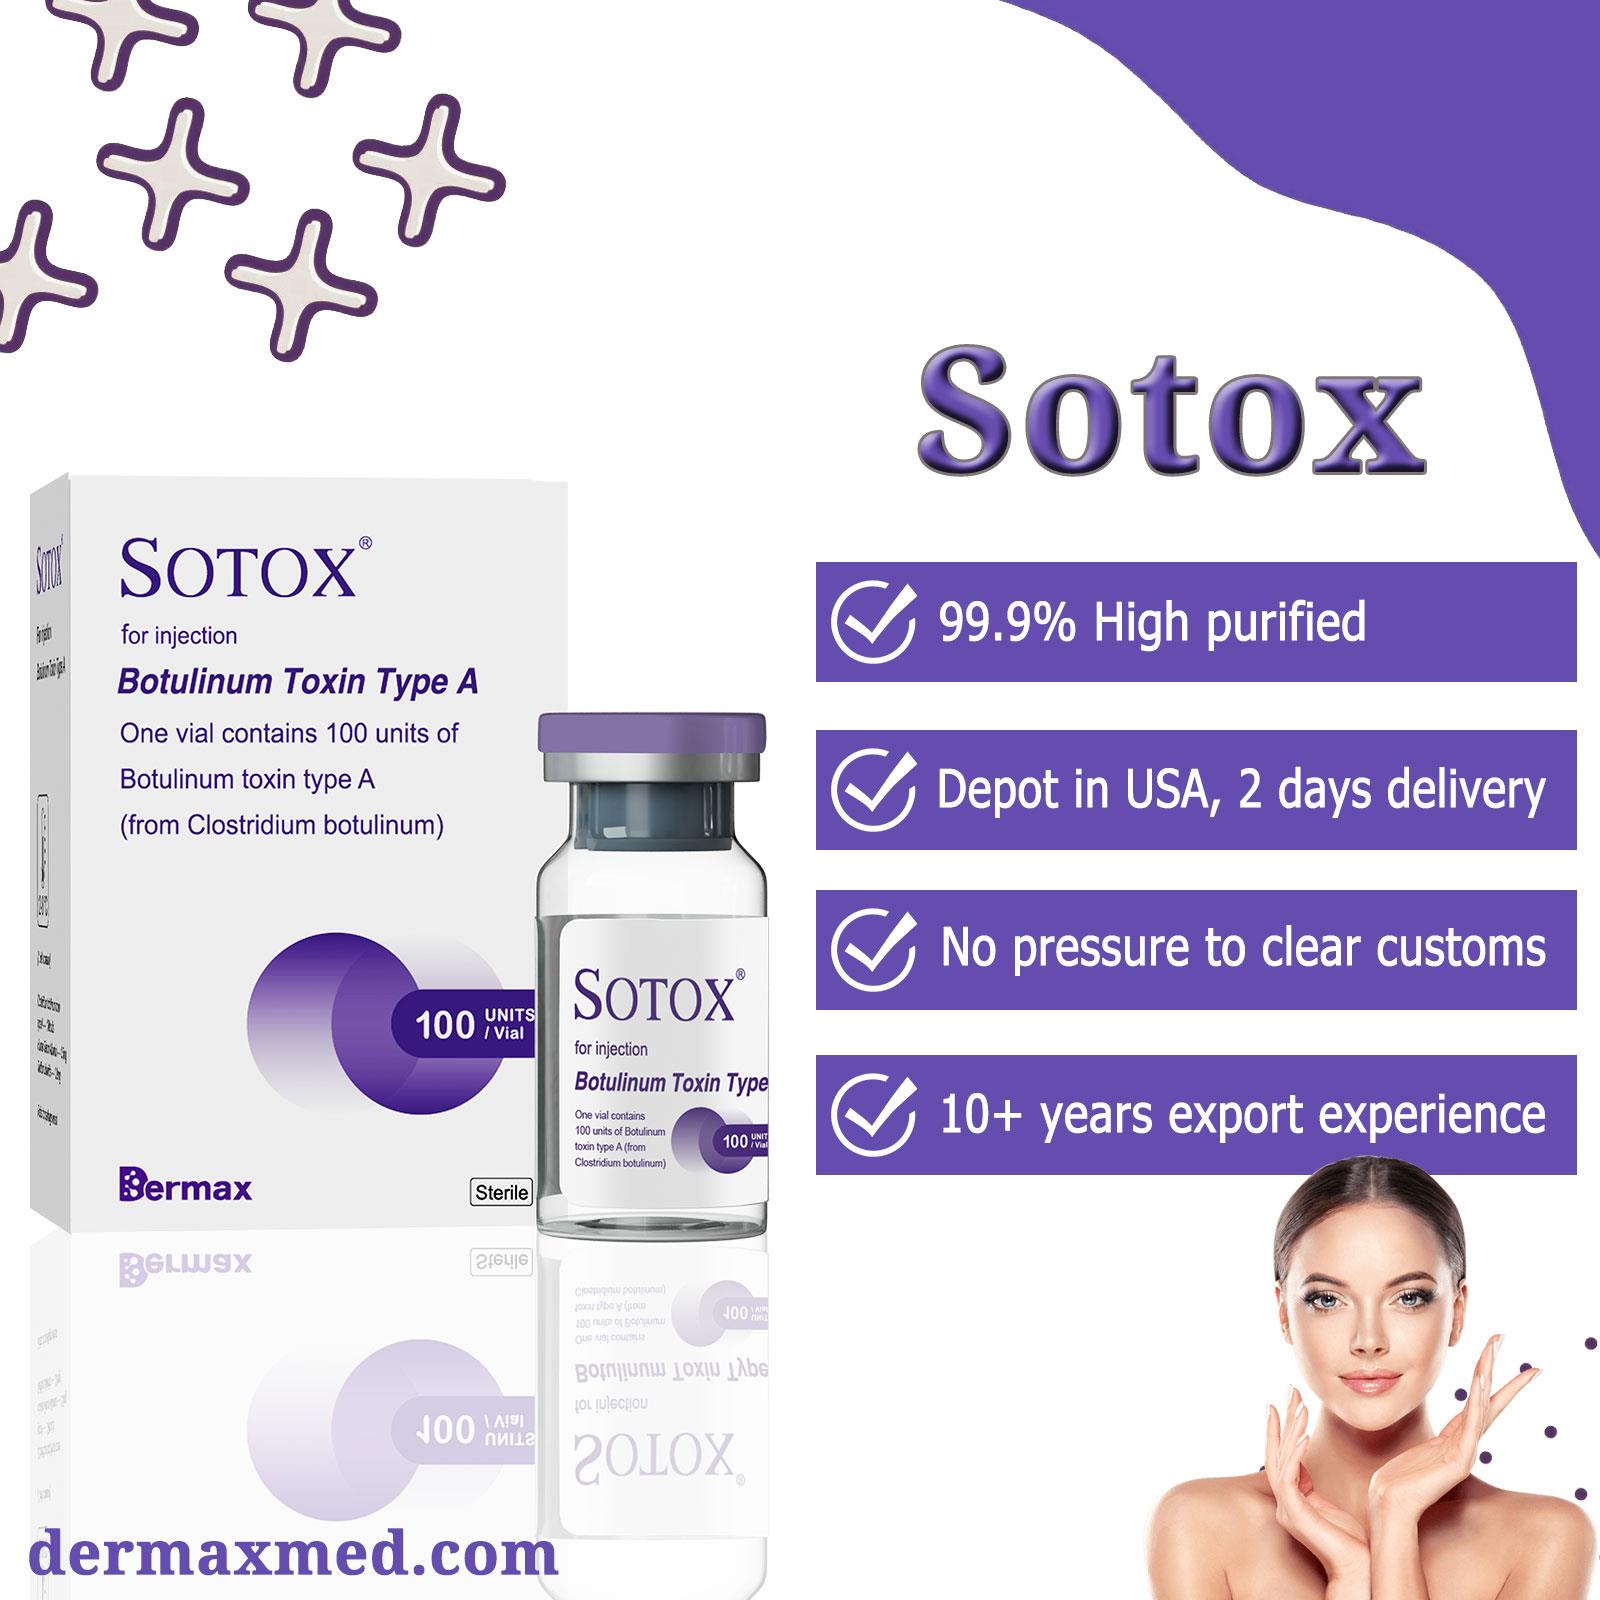 Dermax Offer SOTOX Botulinum Toxin Manufacturer Coupon